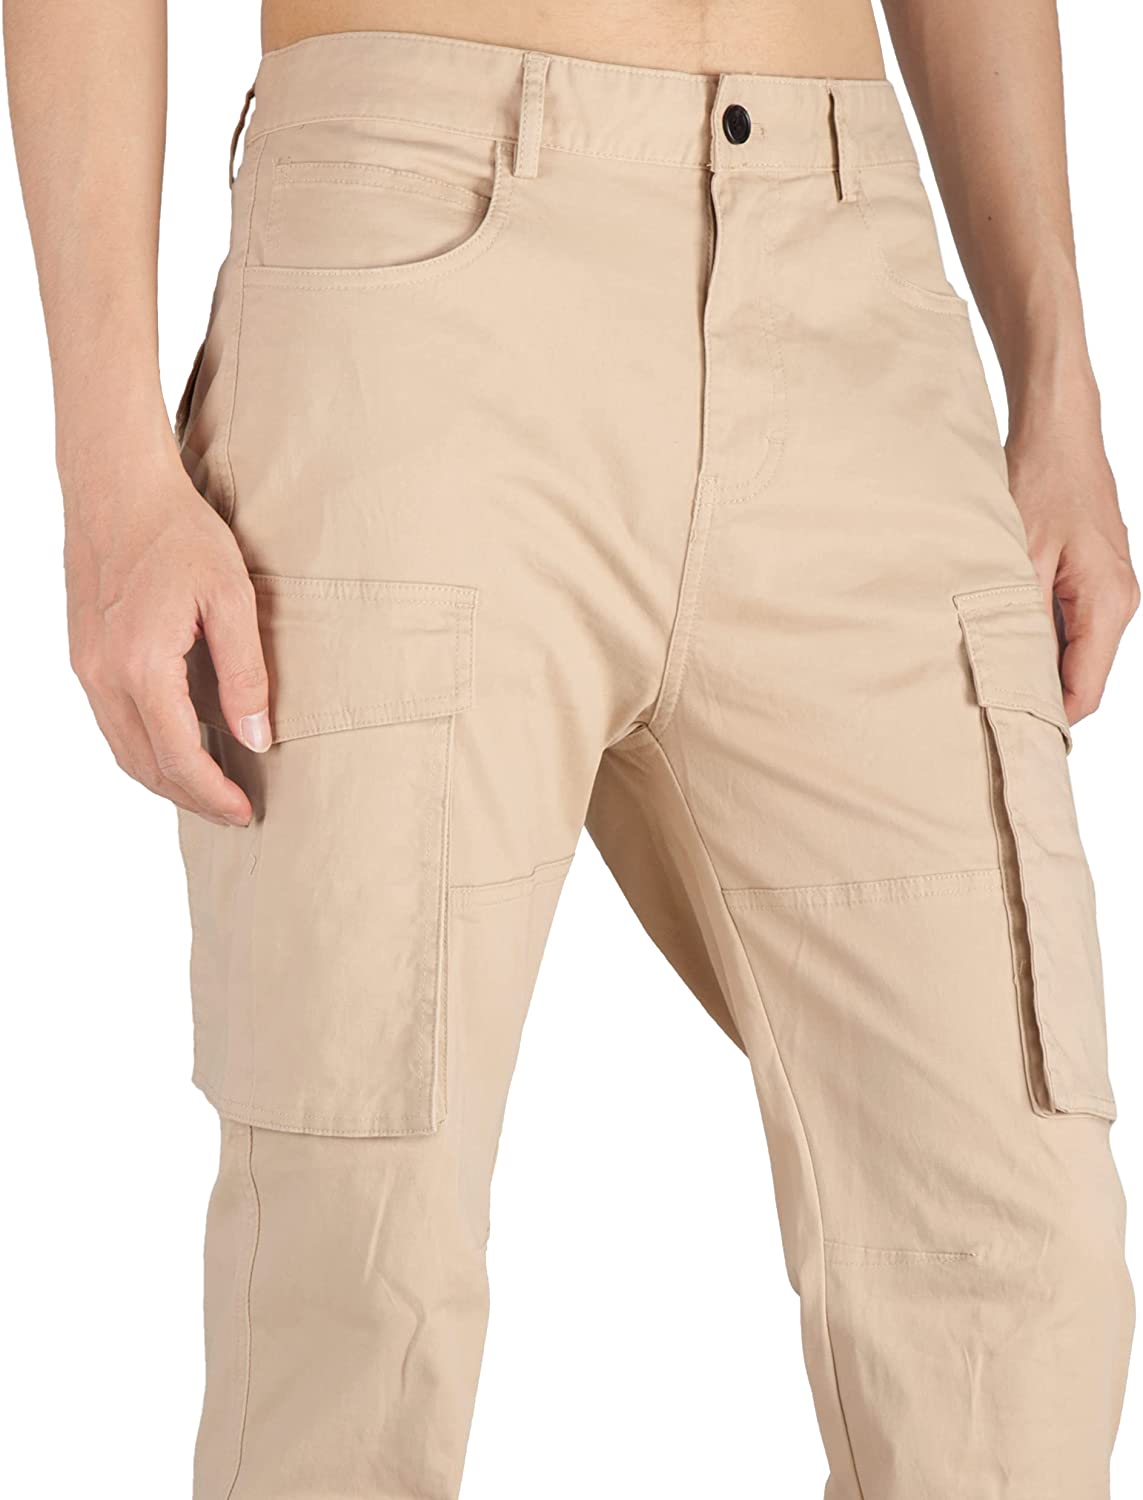 Cargo Black Work Pants Men Multi Pockets Stretch Slim Fit